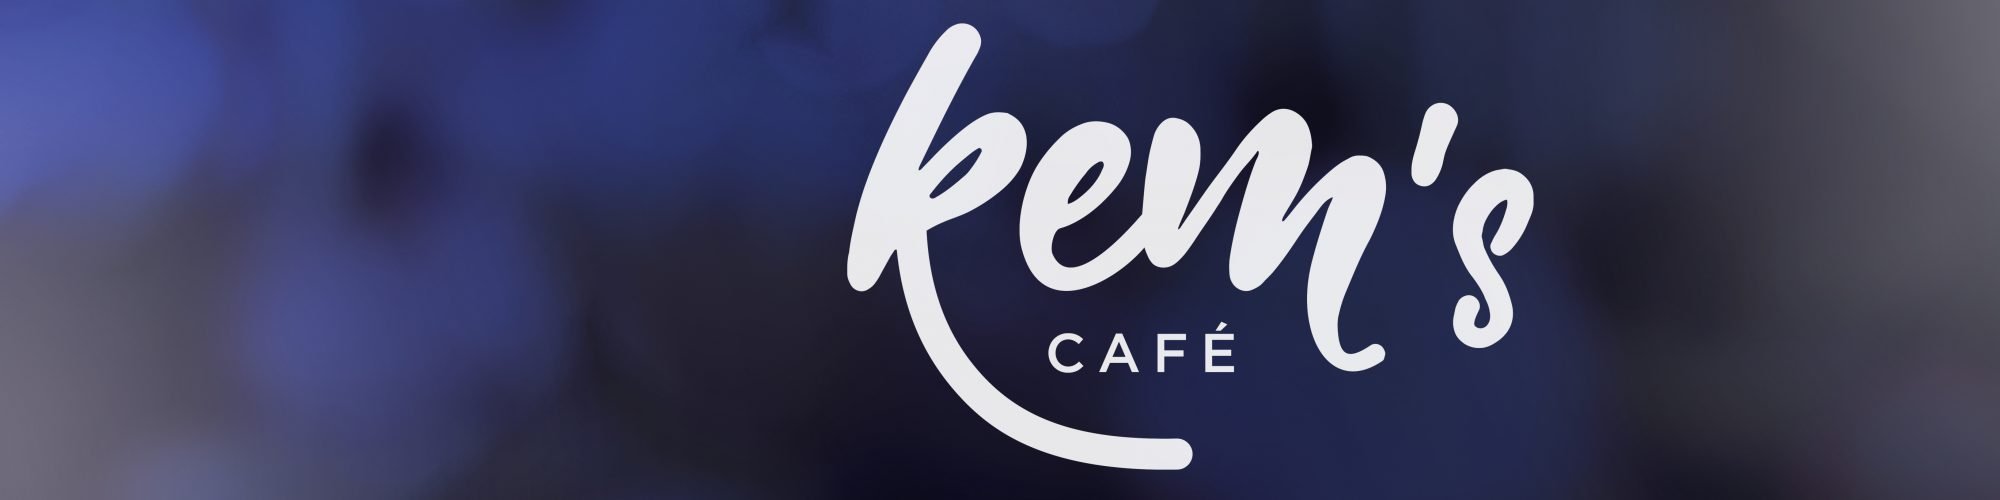 kem's Cafe Werden